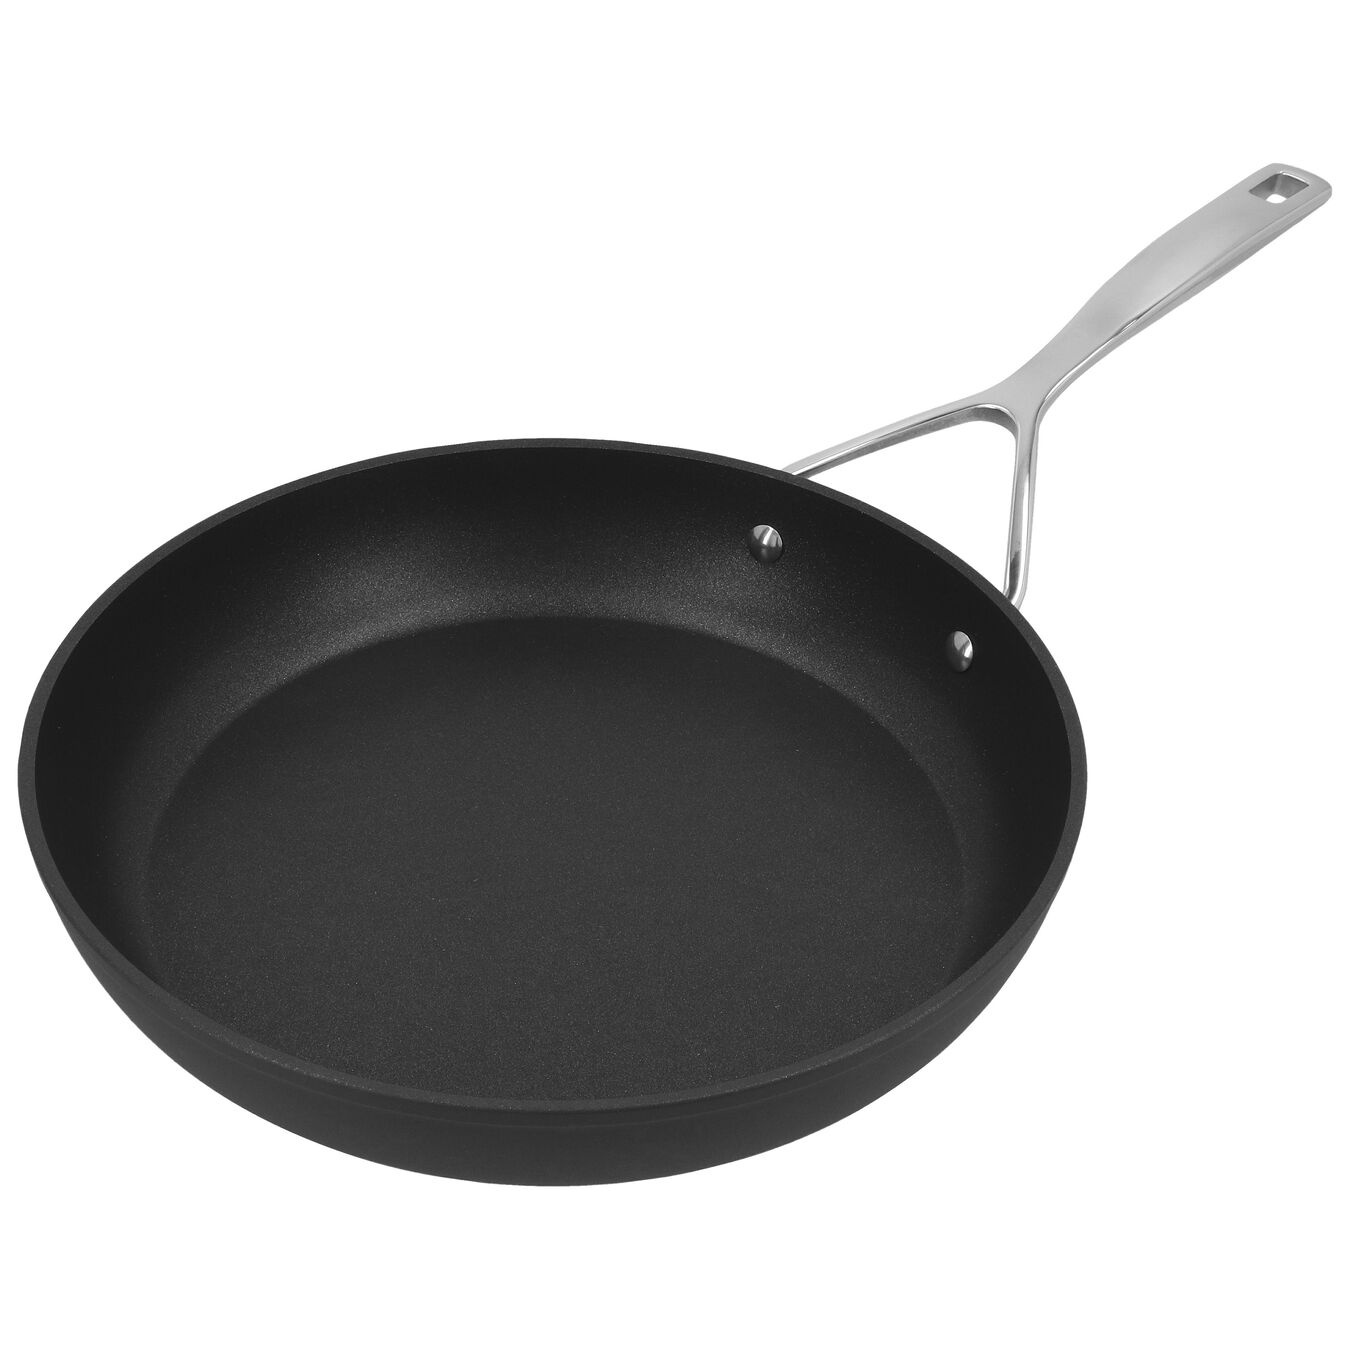 28 cm Aluminum Frying pan silver-black,,large 5